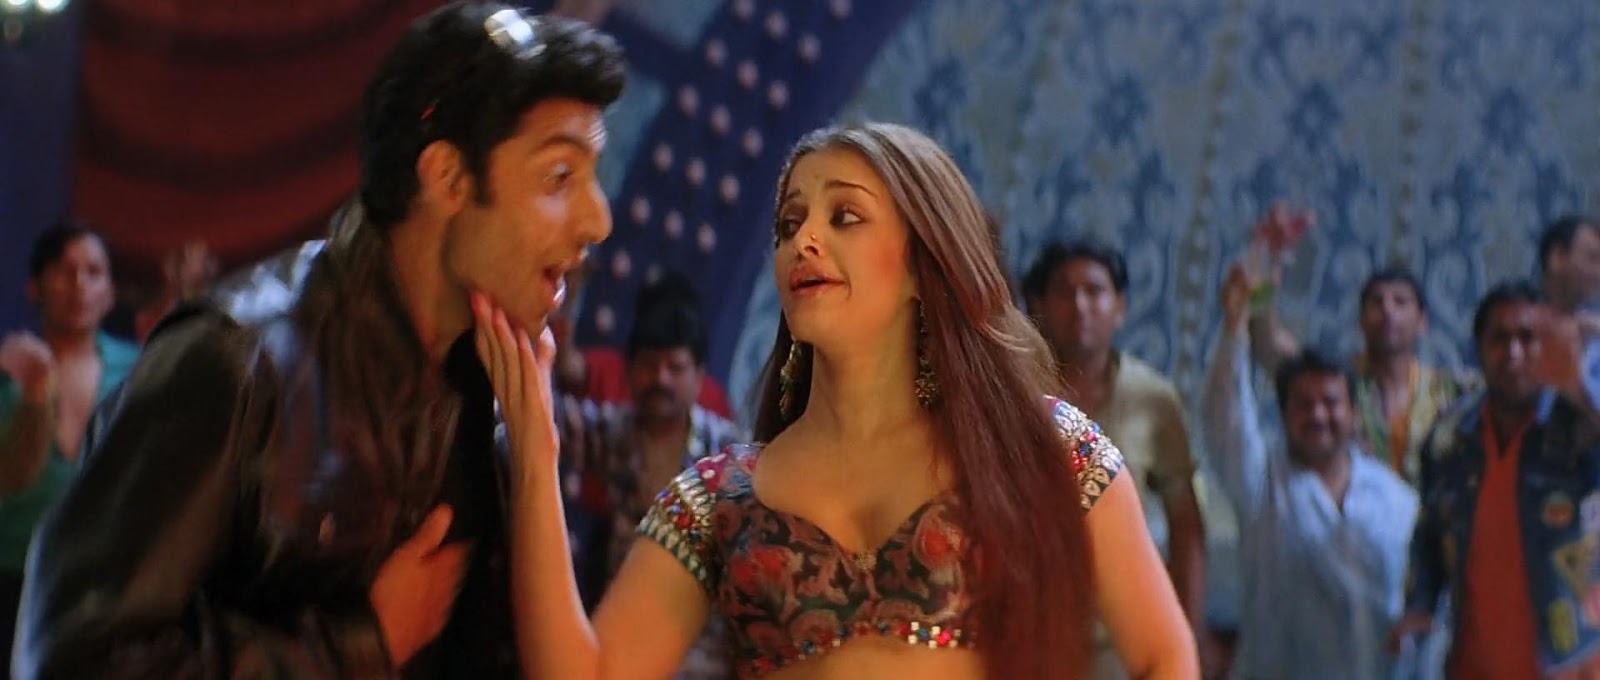 Abhishek bachchan with Aishwarya Rai in Kajra re song